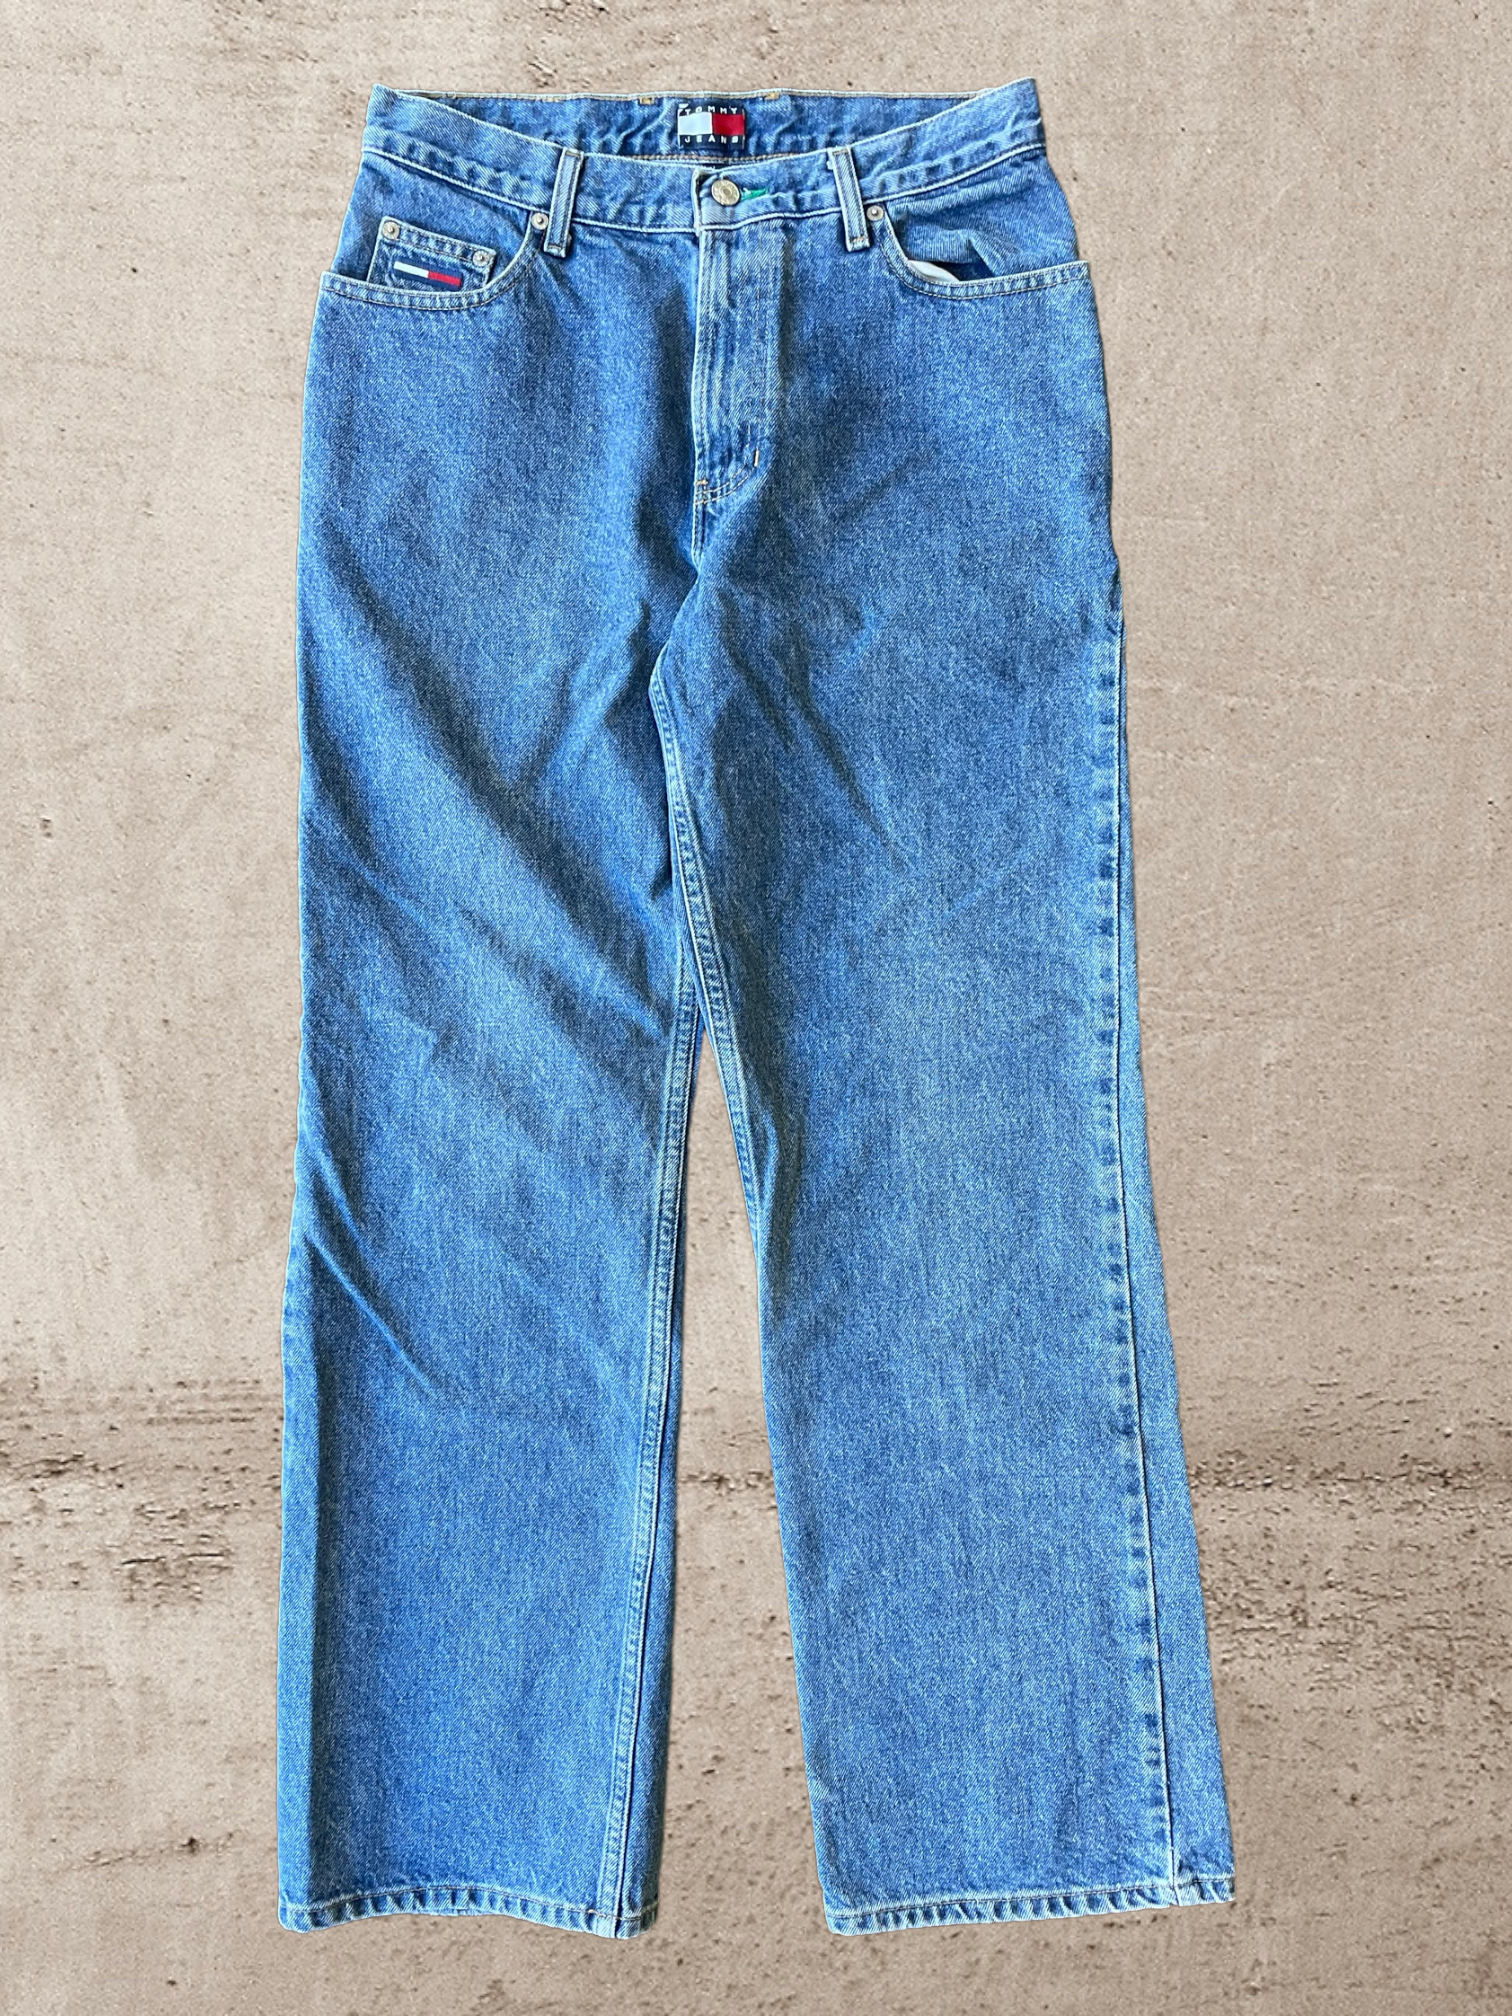 90s Tommy Hilfiger Jeans - 31x31